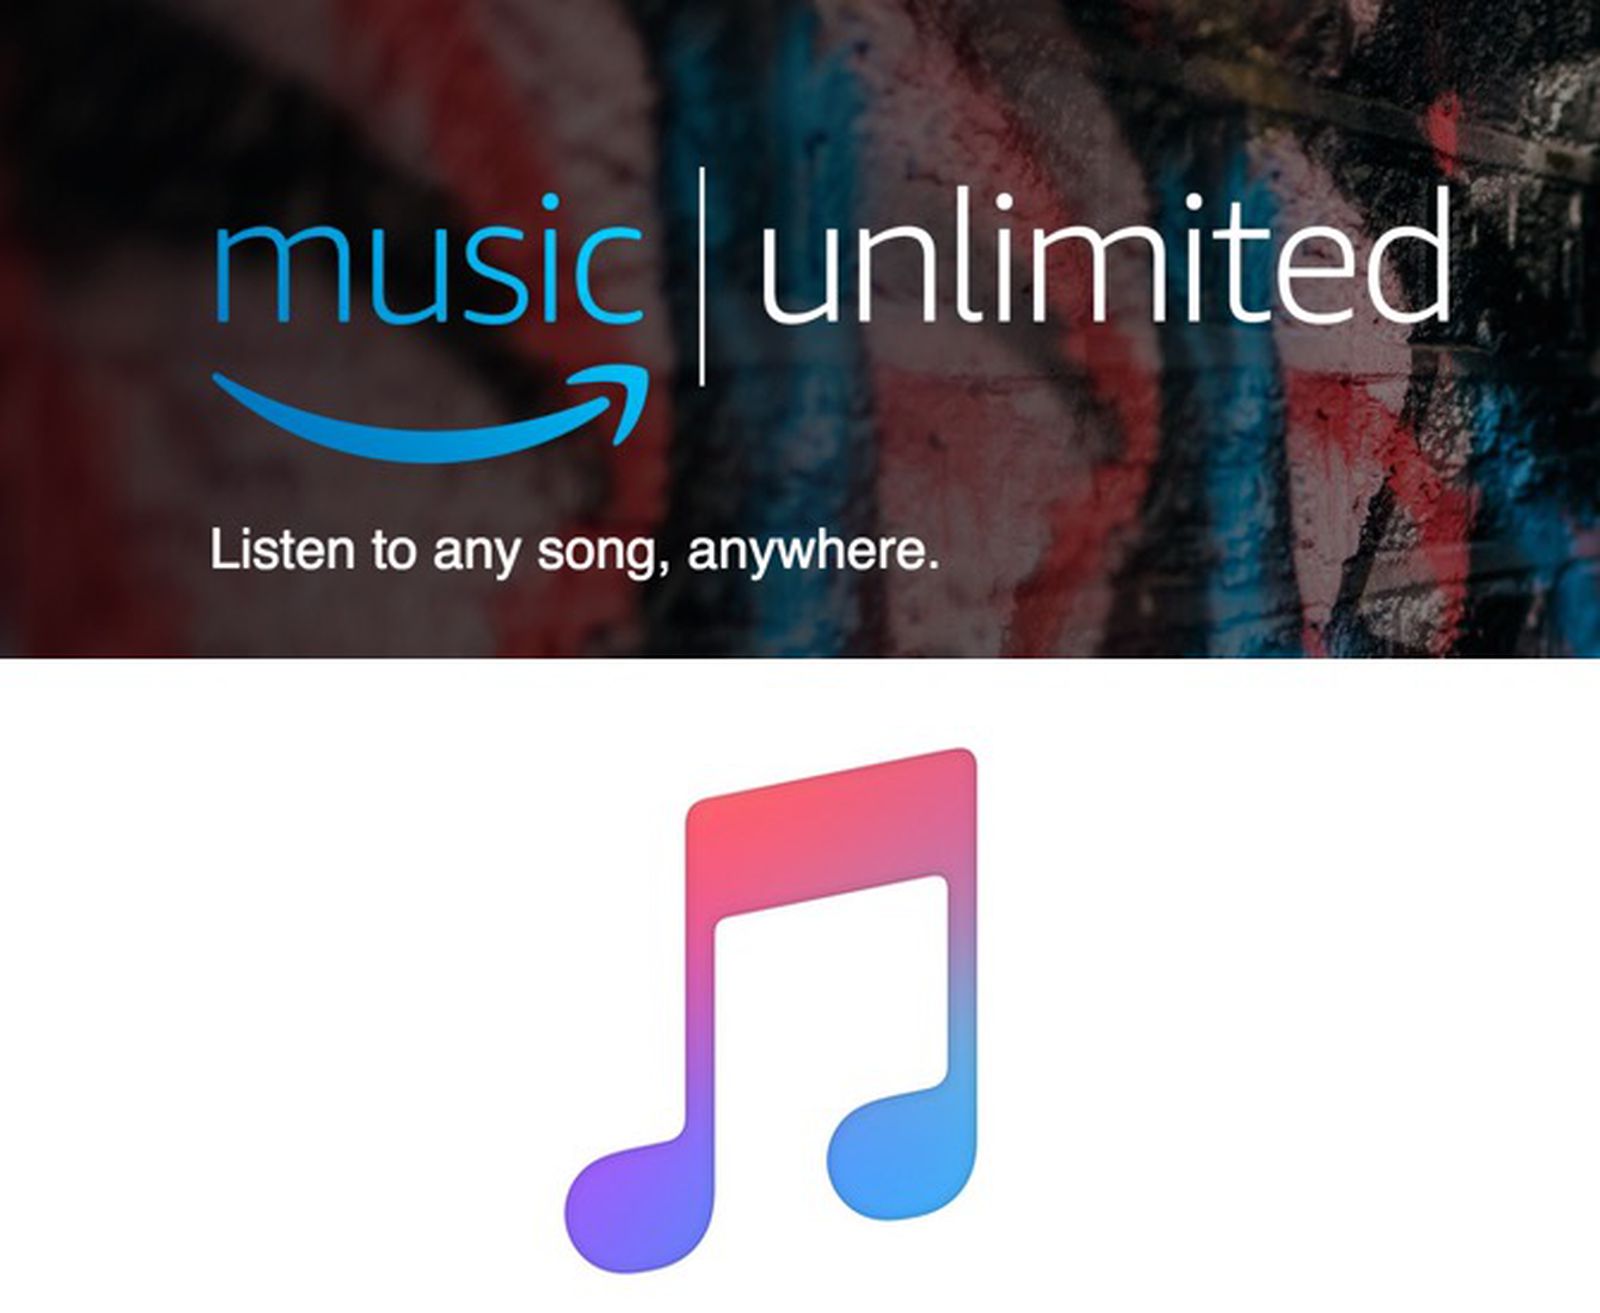 https://images.macrumors.com/t/n_tax9zOkVzO3MX9FUM5qeqEbSE=/1600x/article-new/2019/03/amazon-music-unlimited-apple-music.jpg